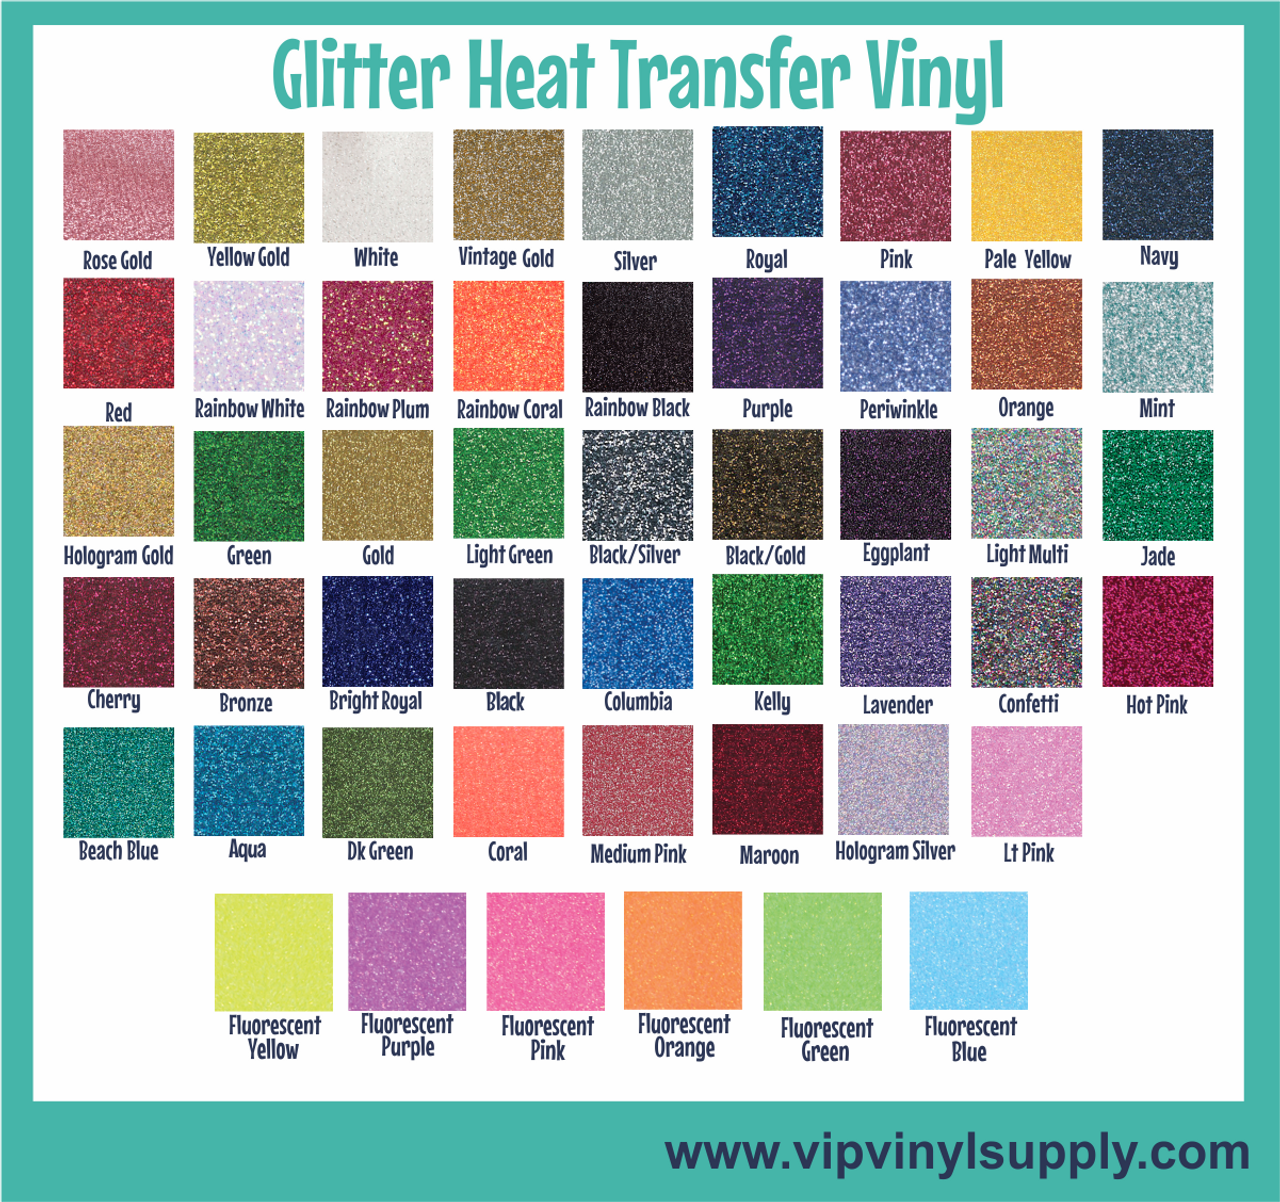 SISER GLITTER HEAT TRANSFER VINYL | 12 inch x 12 inch | 150tees